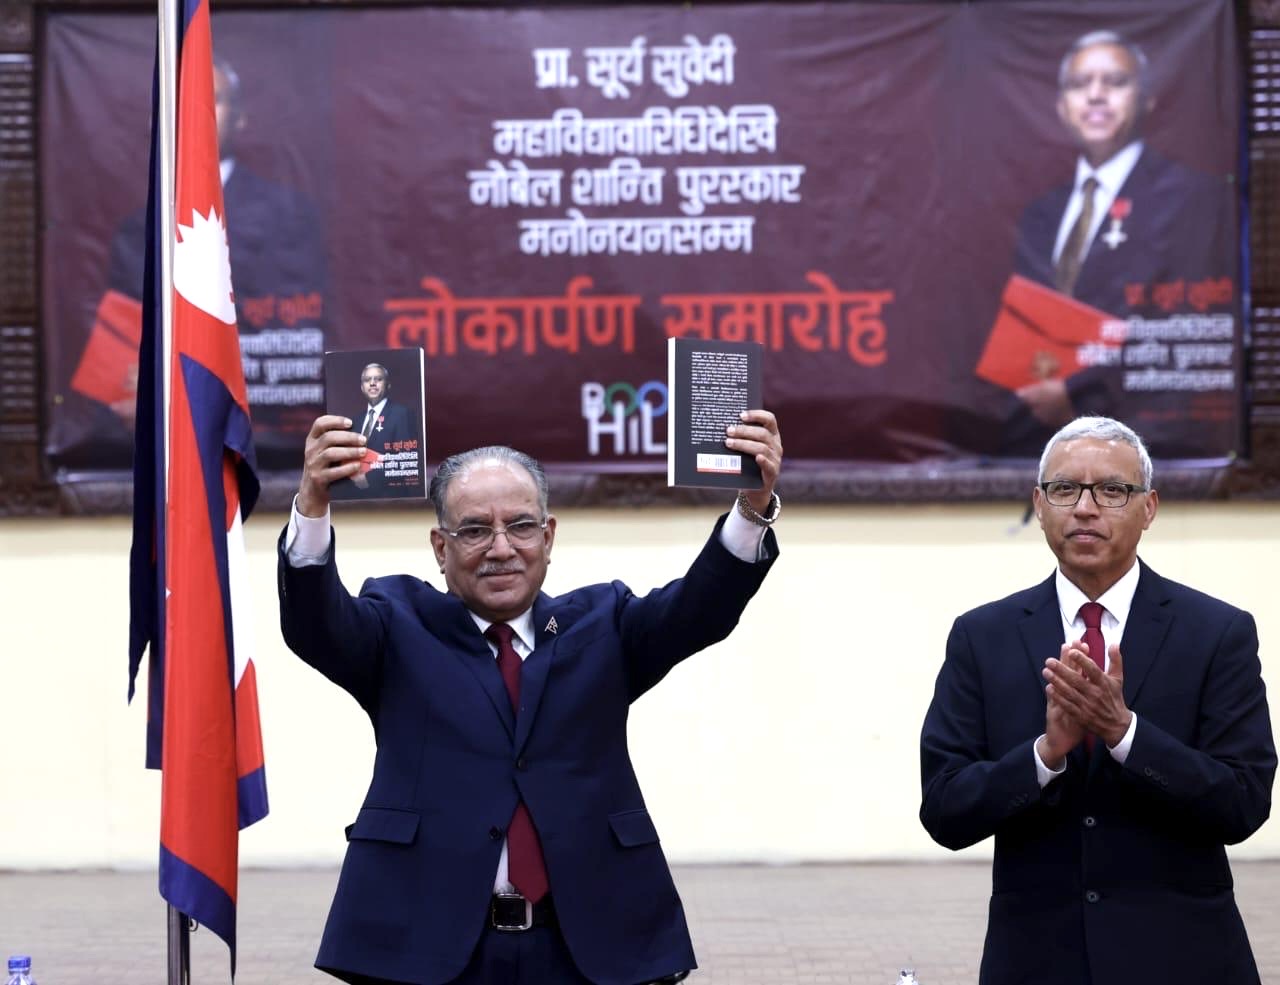 Prime Minister Dahal commends Nepali achievements and Dr. Surya Subedi’s contributions